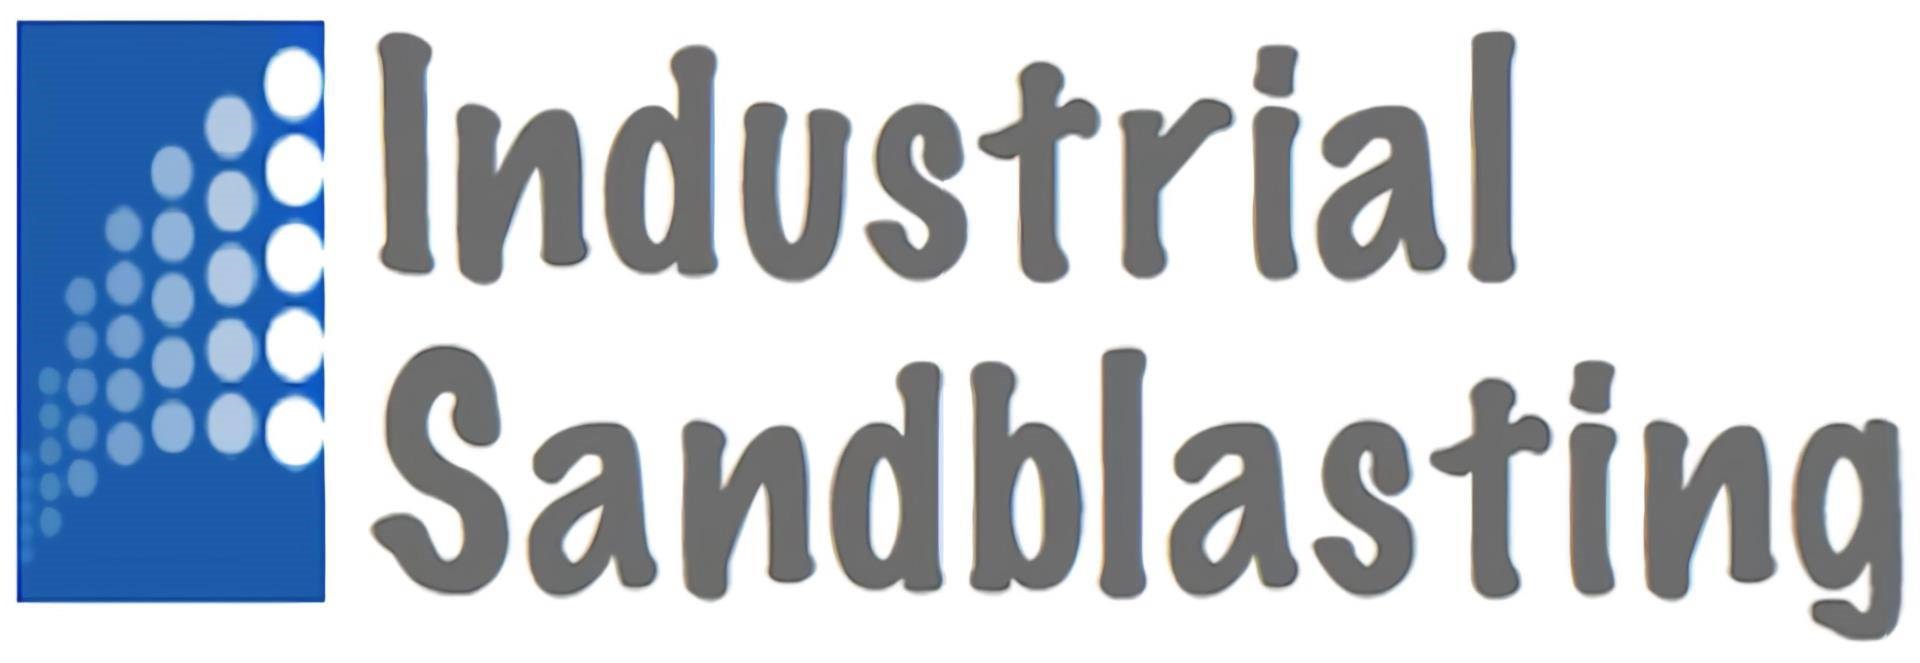 Industrial Sandblasting logo